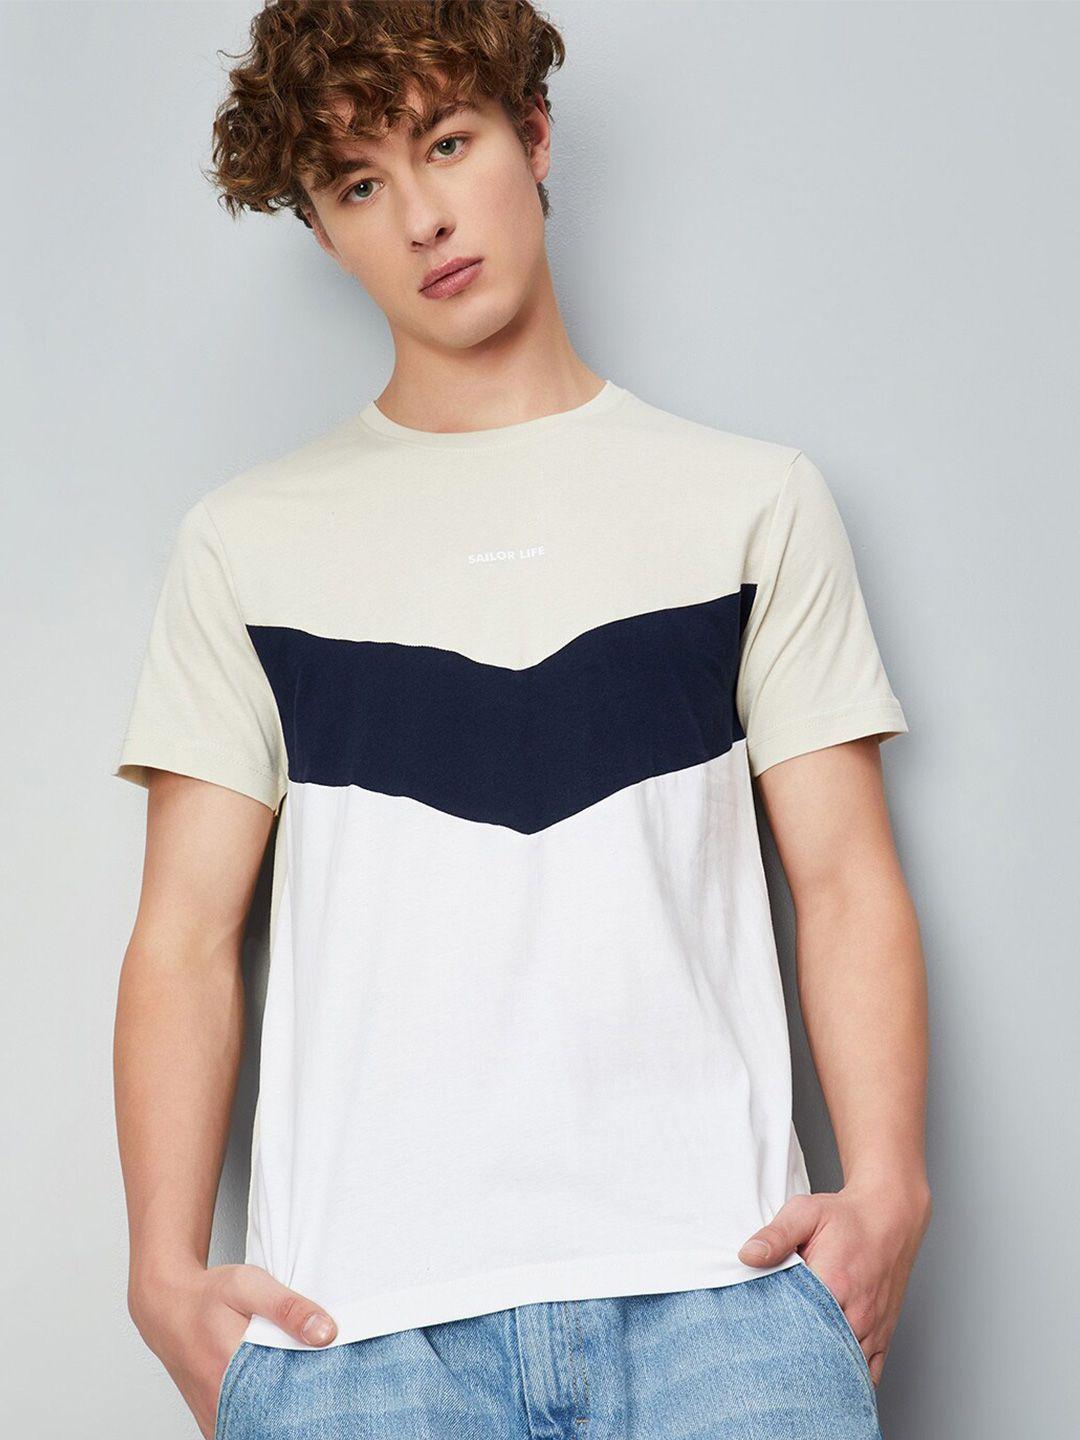 max colourblocked pure cotton t-shirt